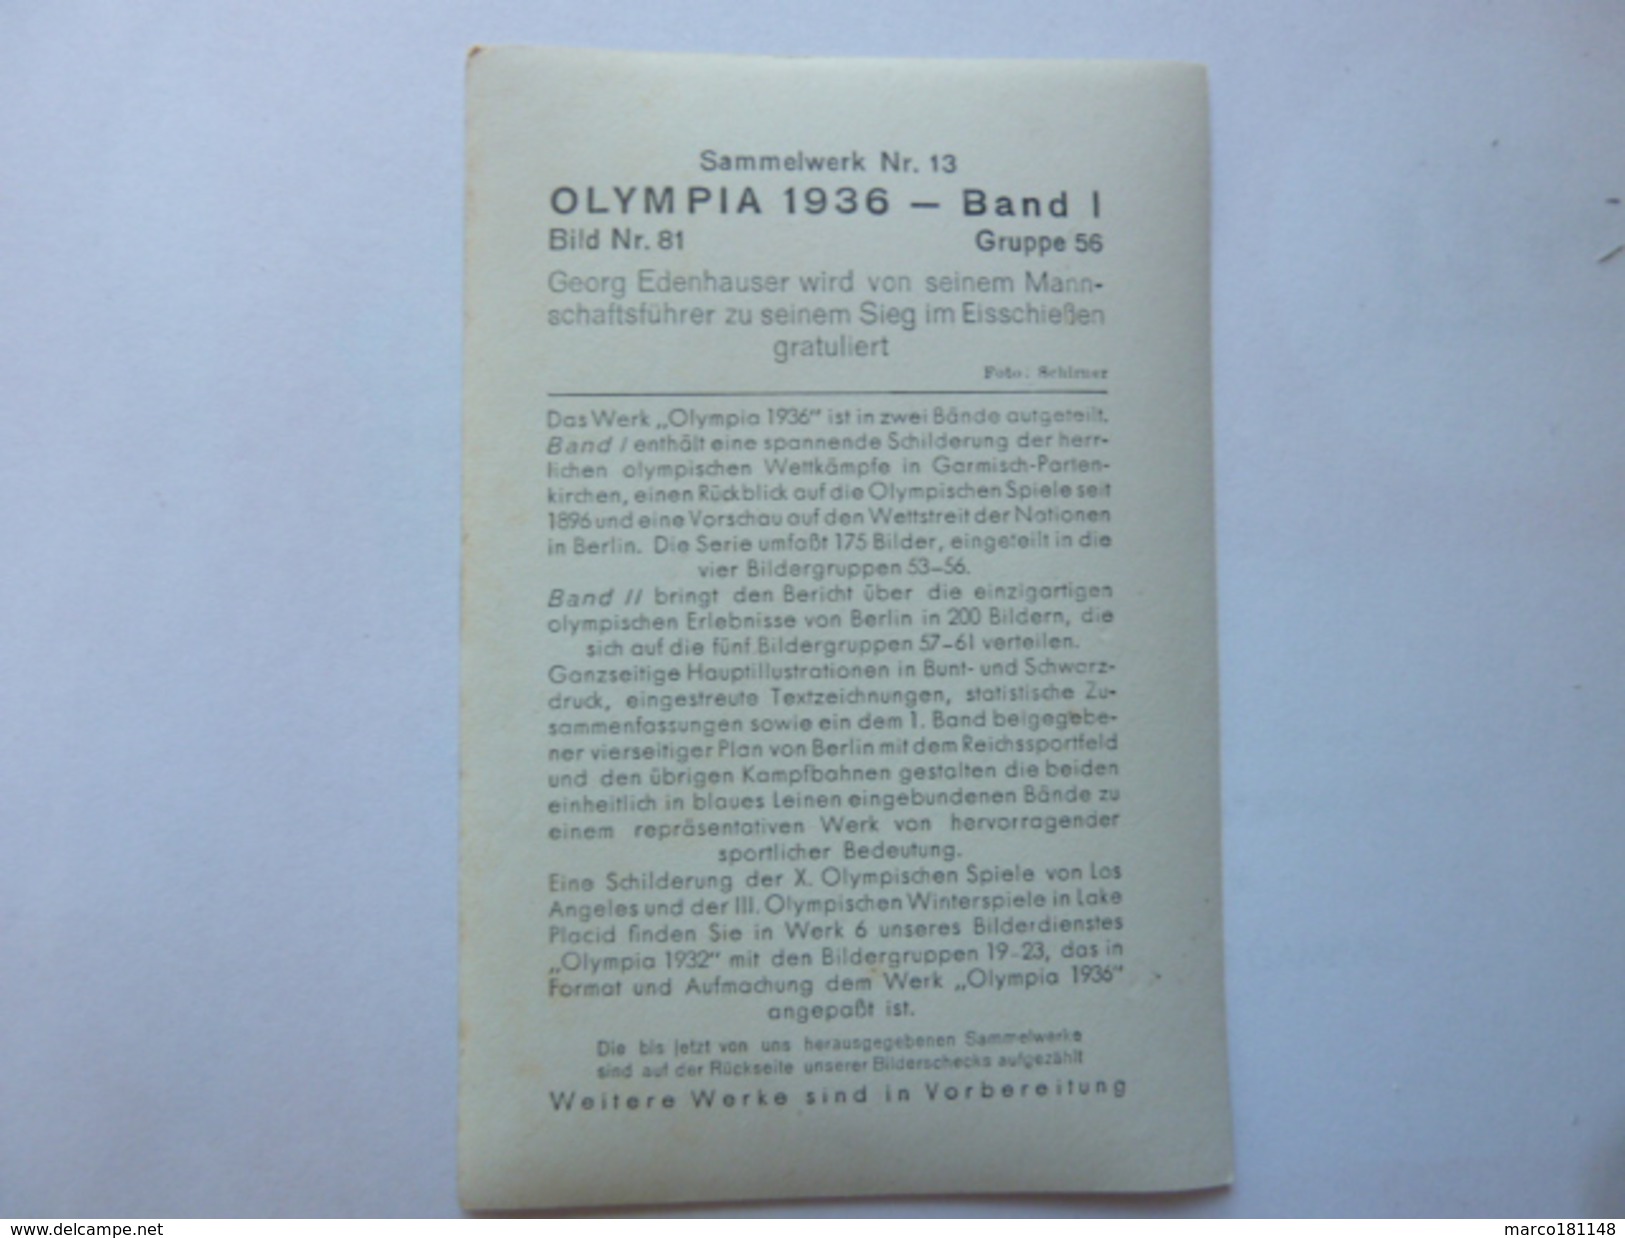 OLYMPIA 1936 - Band 1 - Bild Nr 81 Gruppe 56 - Georg Edenhauser - Sport